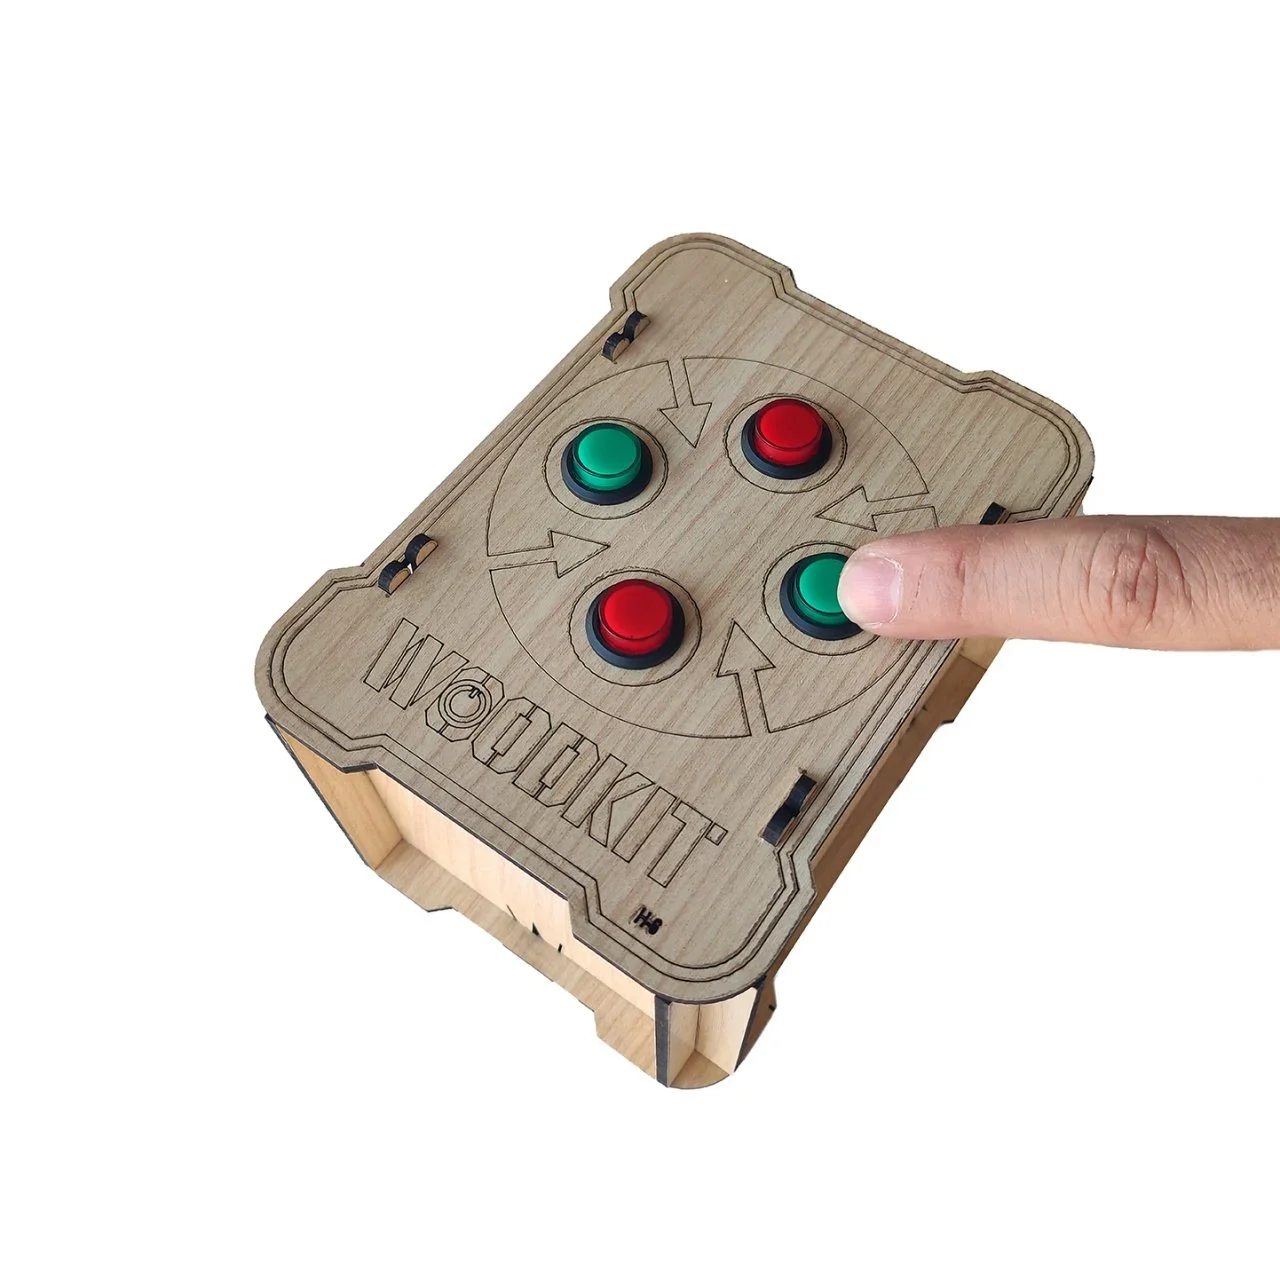 Wood-Kit Robotic Coding kit - Color Memory Game - Thumbnail